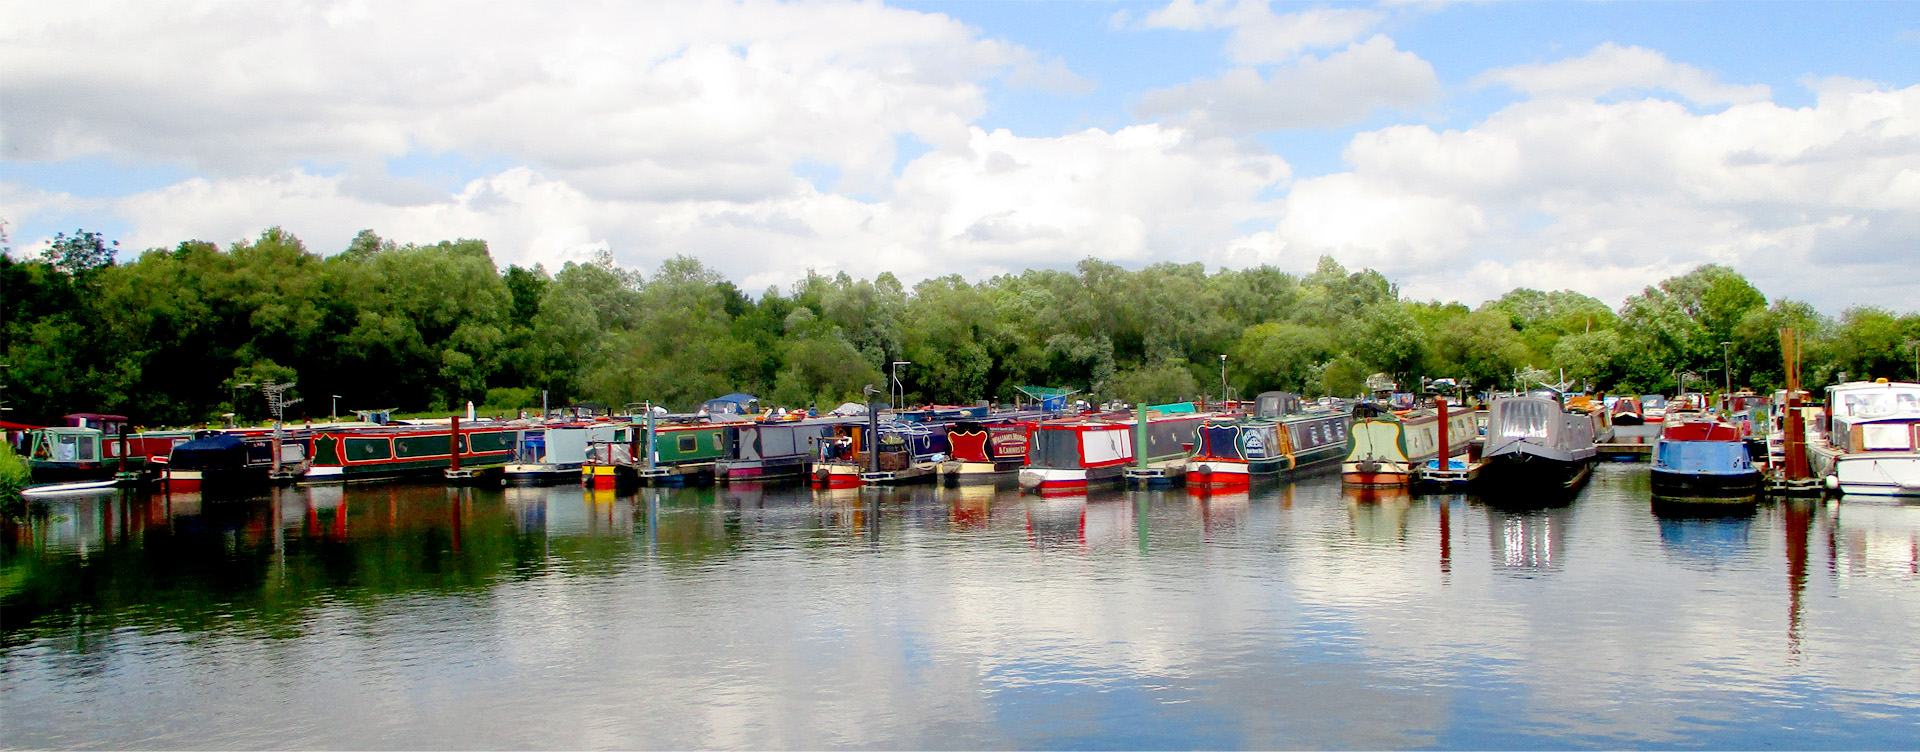 Blackthorn Lake Marina Ringstead Northamptonshire - Boat Sales - Narrowboat Sales - Paint Dock - Slipway